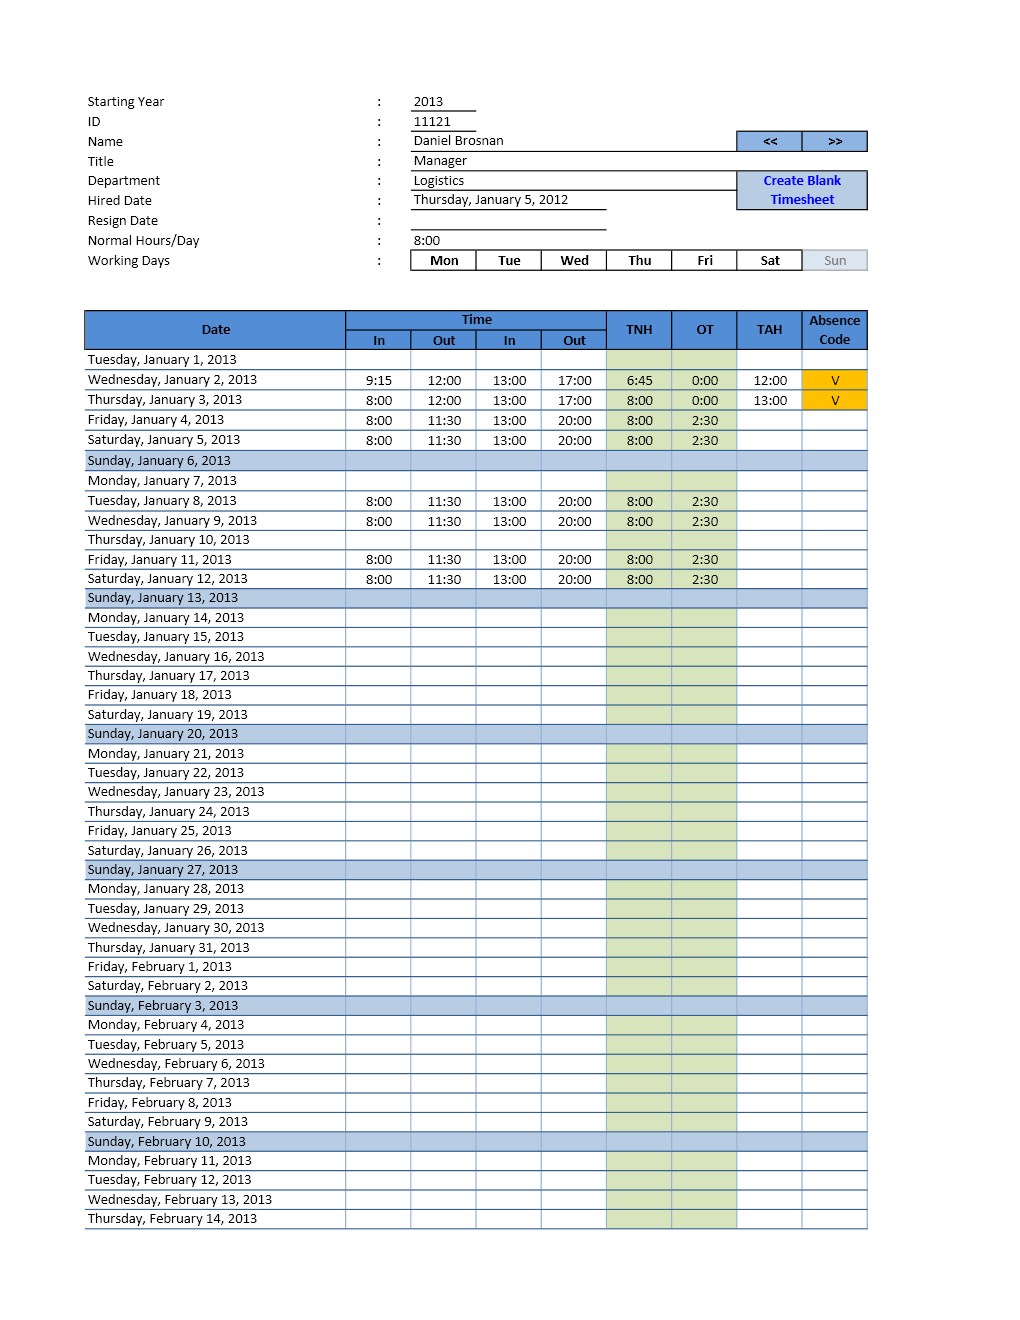 Employee Attendance Calendar And Vacation Planner